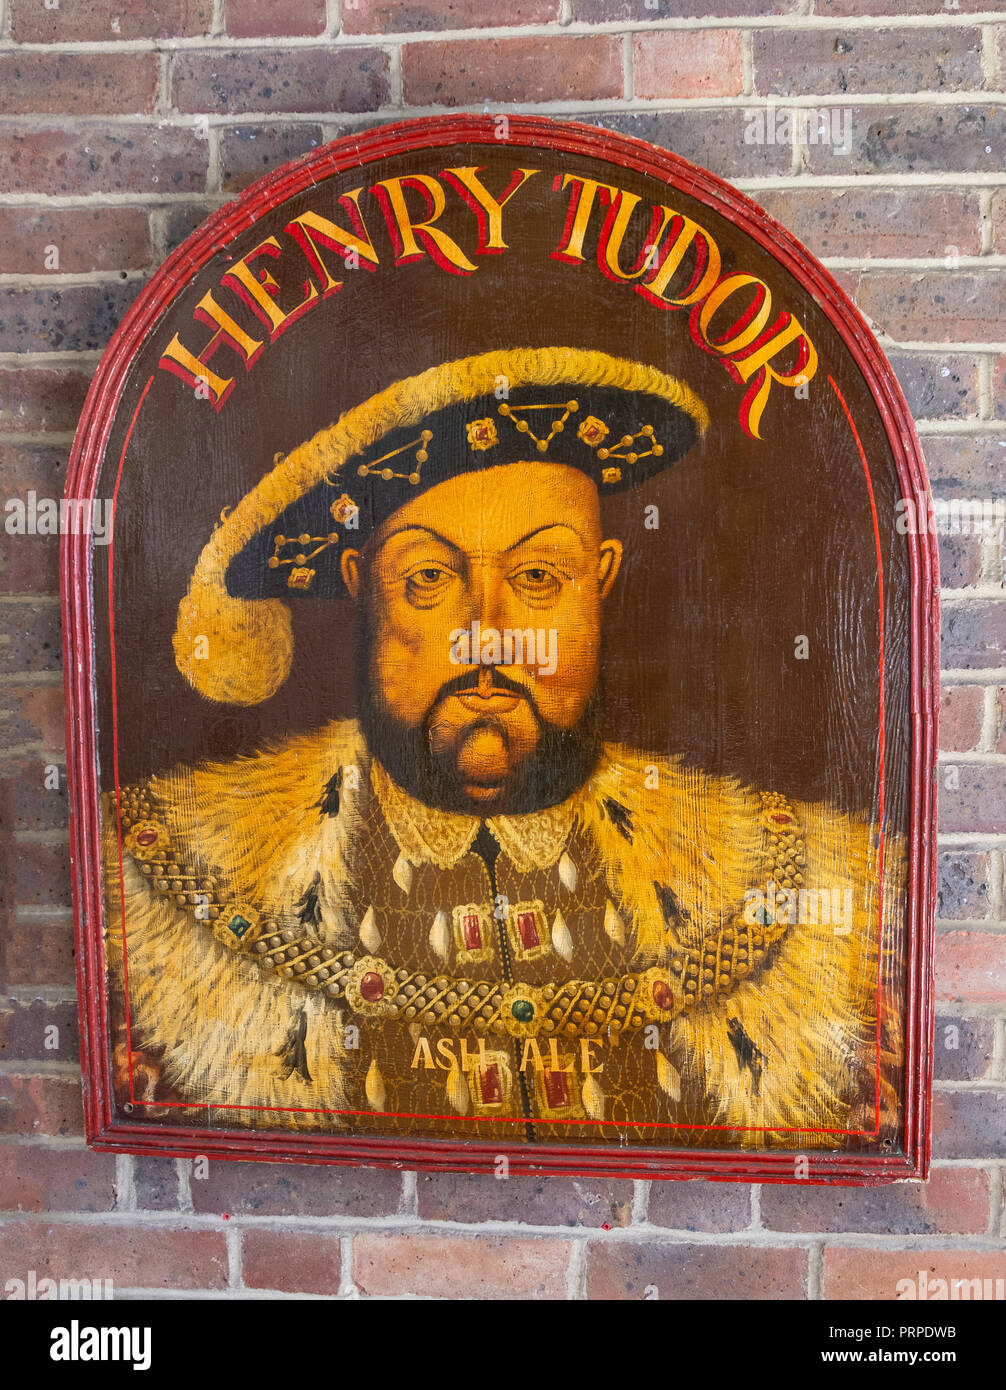 Henry Tutor pub sign at The Midhurst Museum, Knockhundred Mews, Midhurst, West Sussex, England, United Kingdom Stock Photo